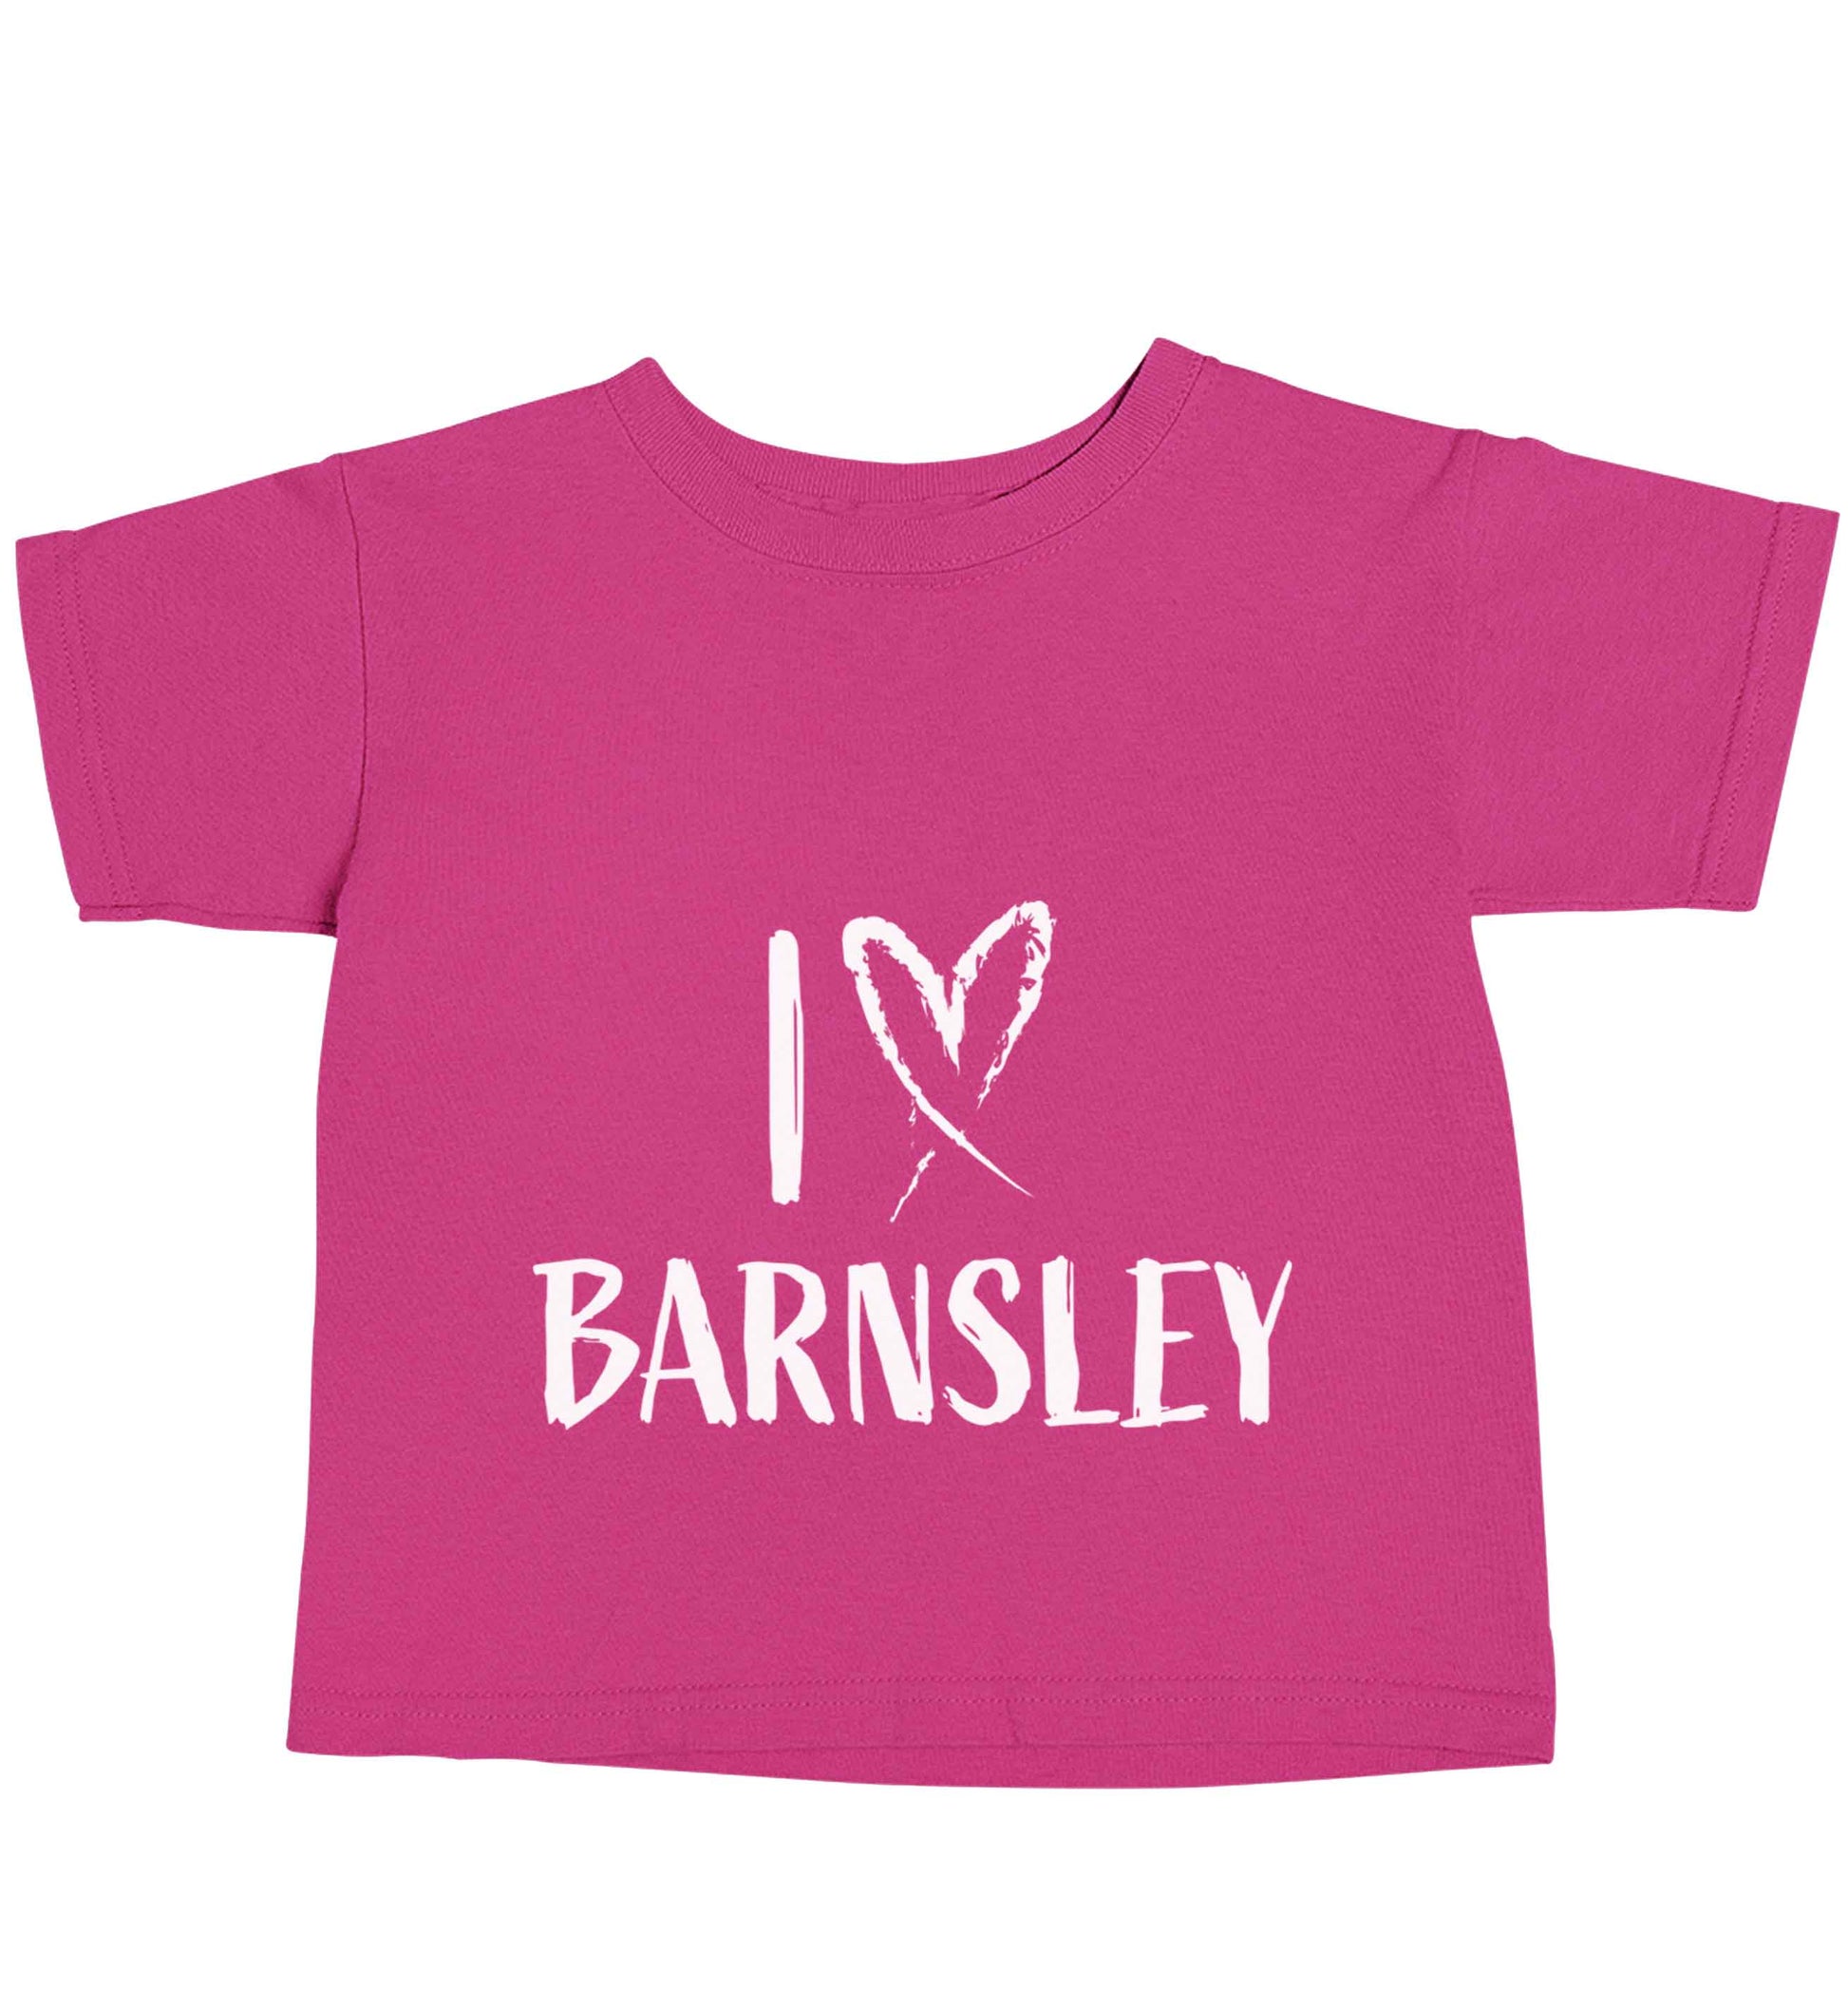 I love Barnsley pink baby toddler Tshirt 2 Years